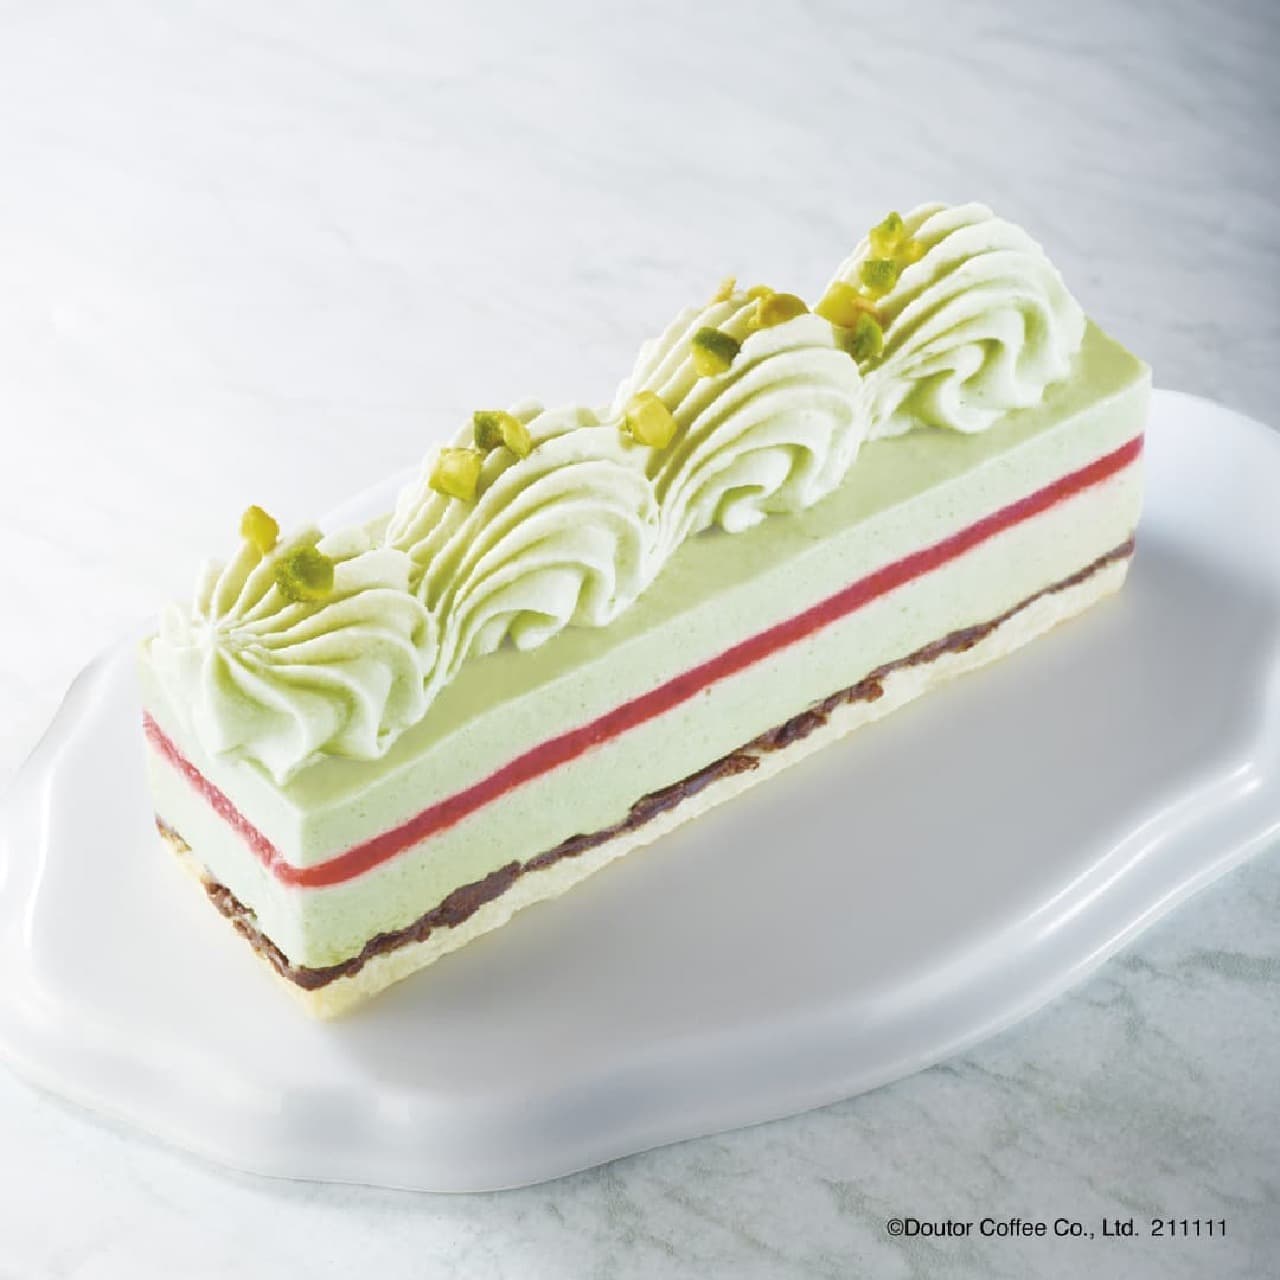 Excelsior Cafe "Pistachio & Berry Cake"